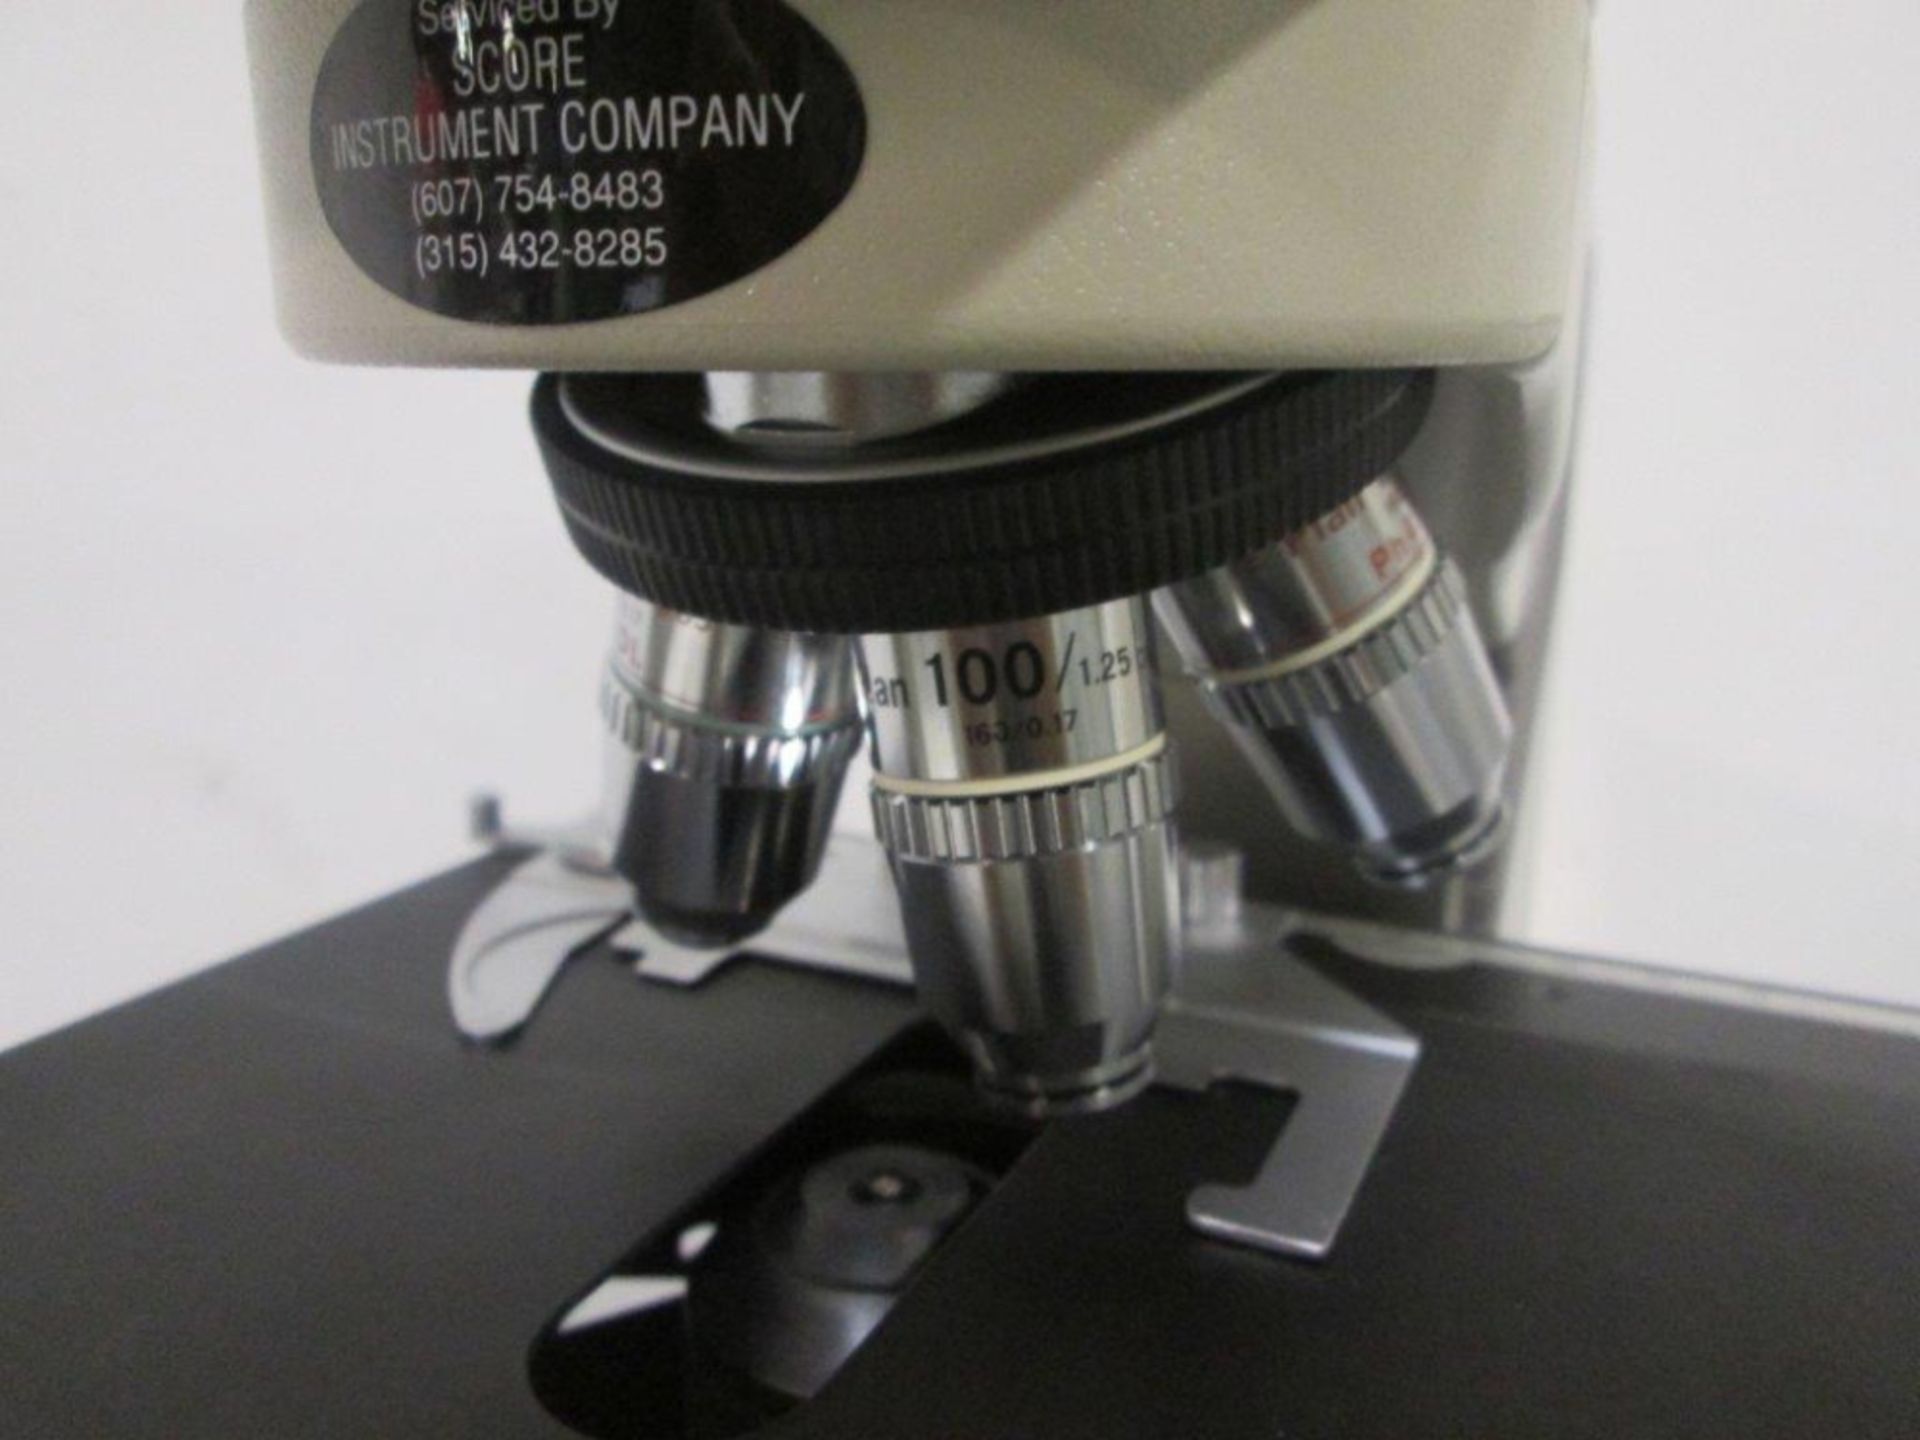 Nikon Labphot 2 Stereo Microscope - Image 3 of 3